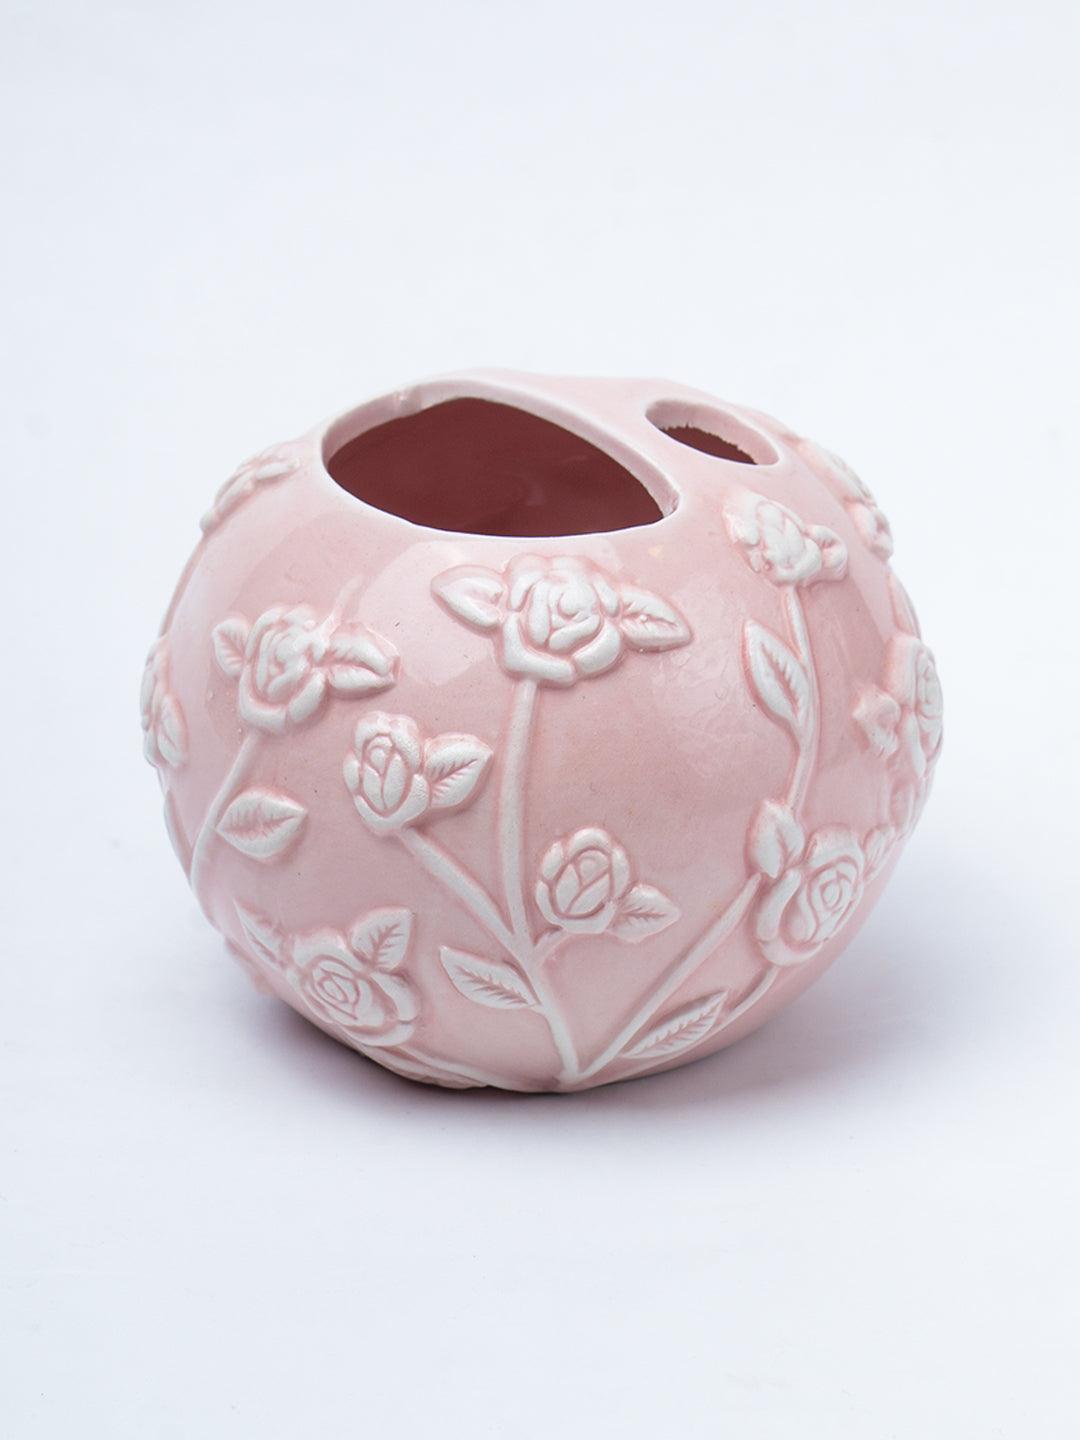 Pink Ceramic Bathroom Set Of 4 - Floral Design, Bath Accessories - 5